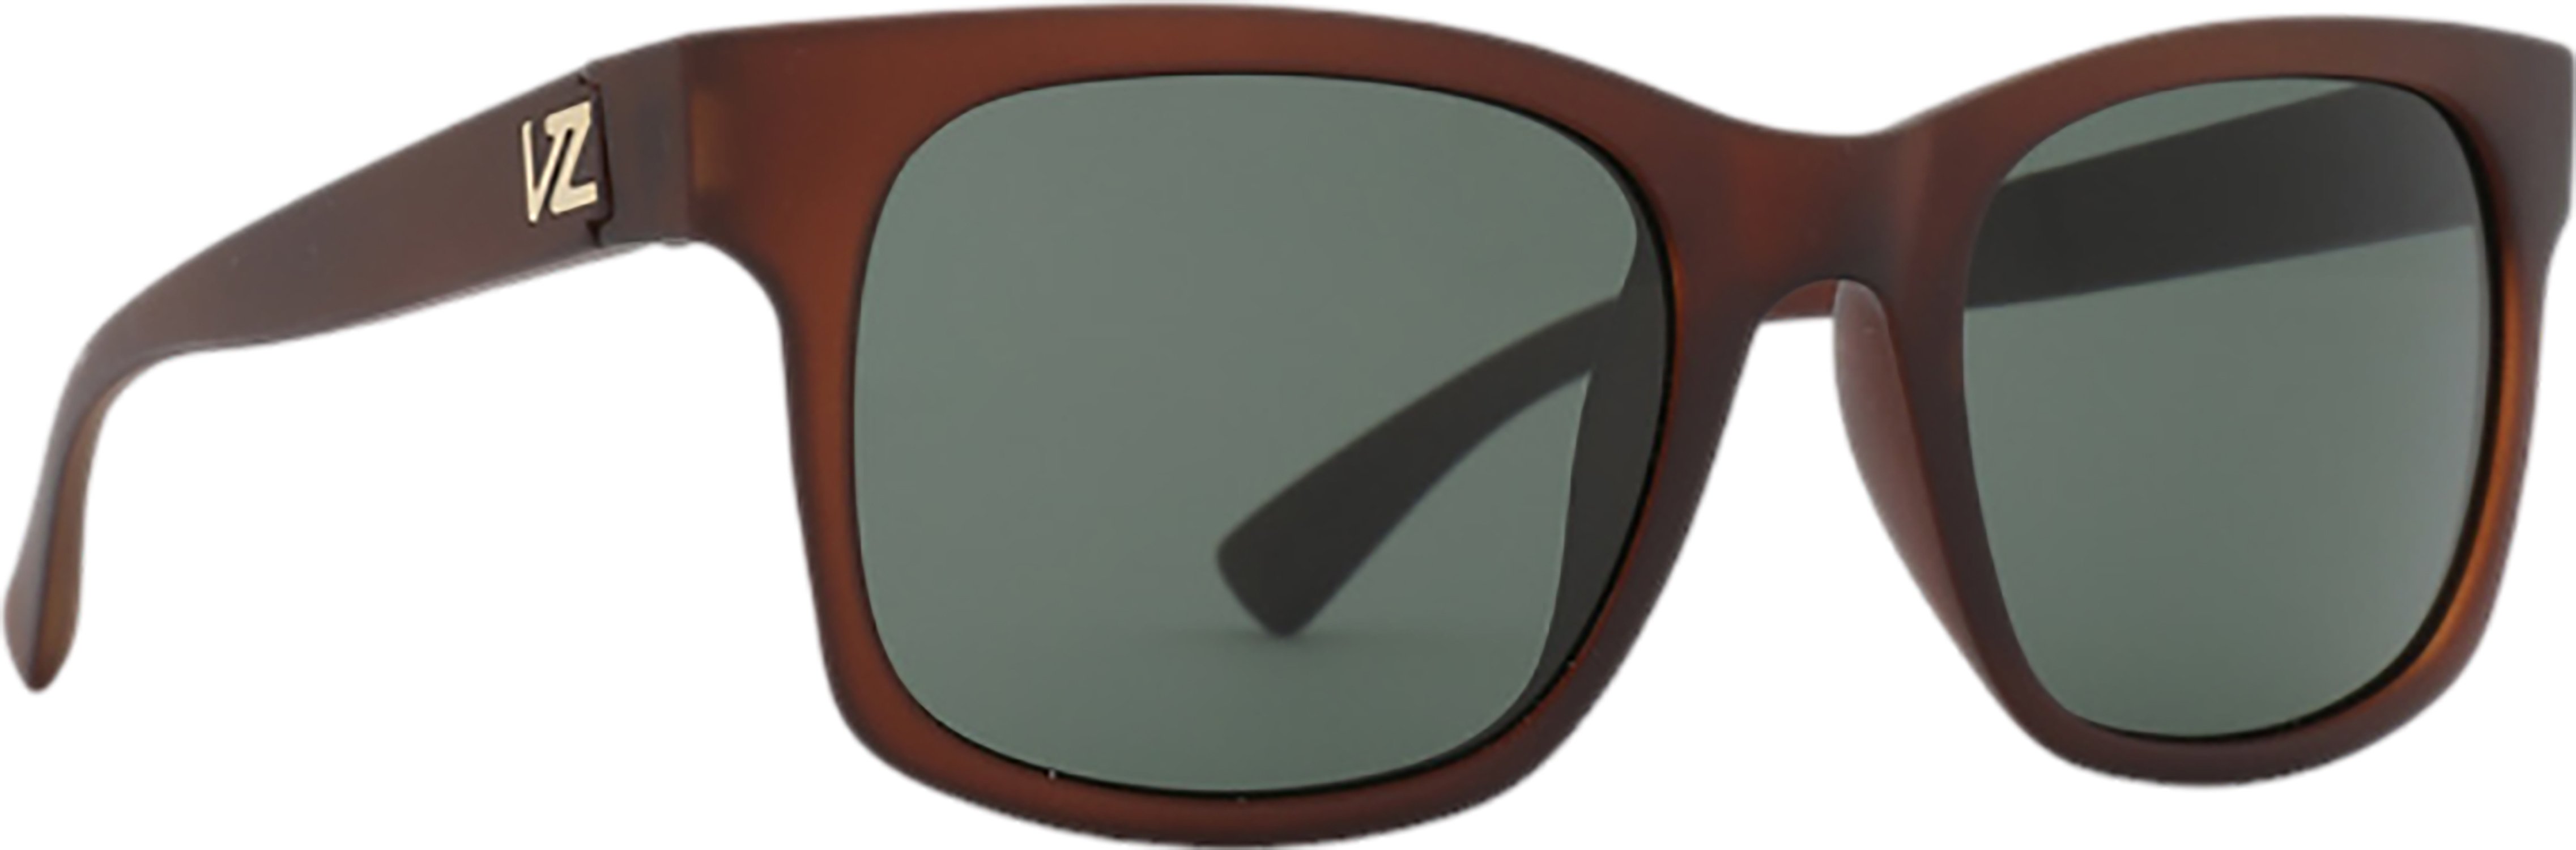 Bayou Polarized - Sunglasses for Men